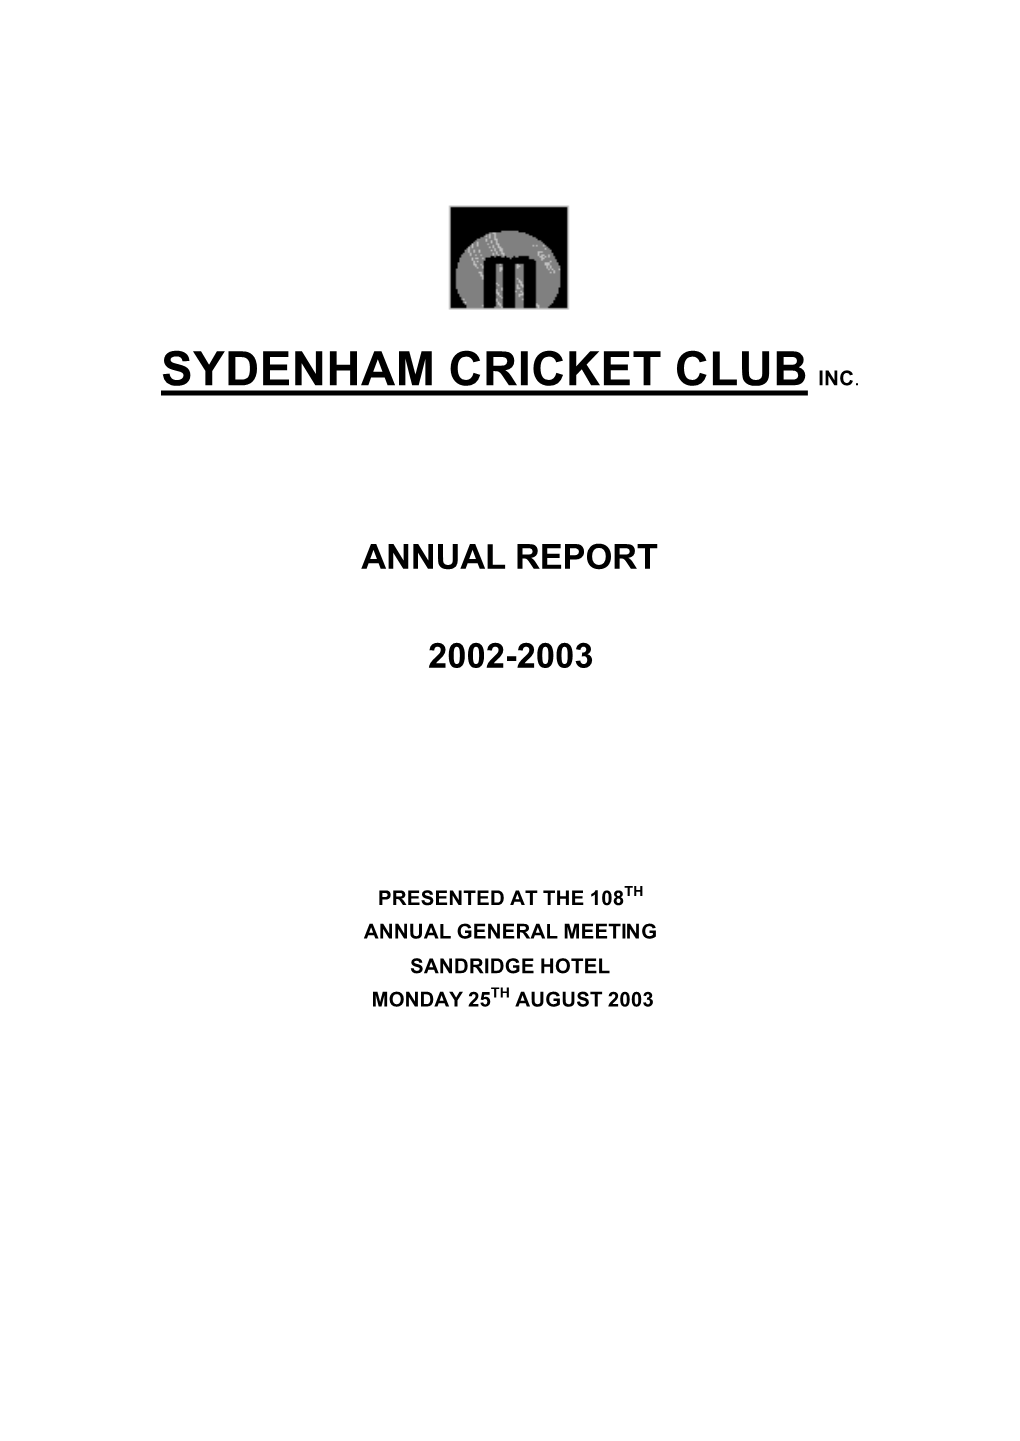 Sydenham Cricket Club Inc